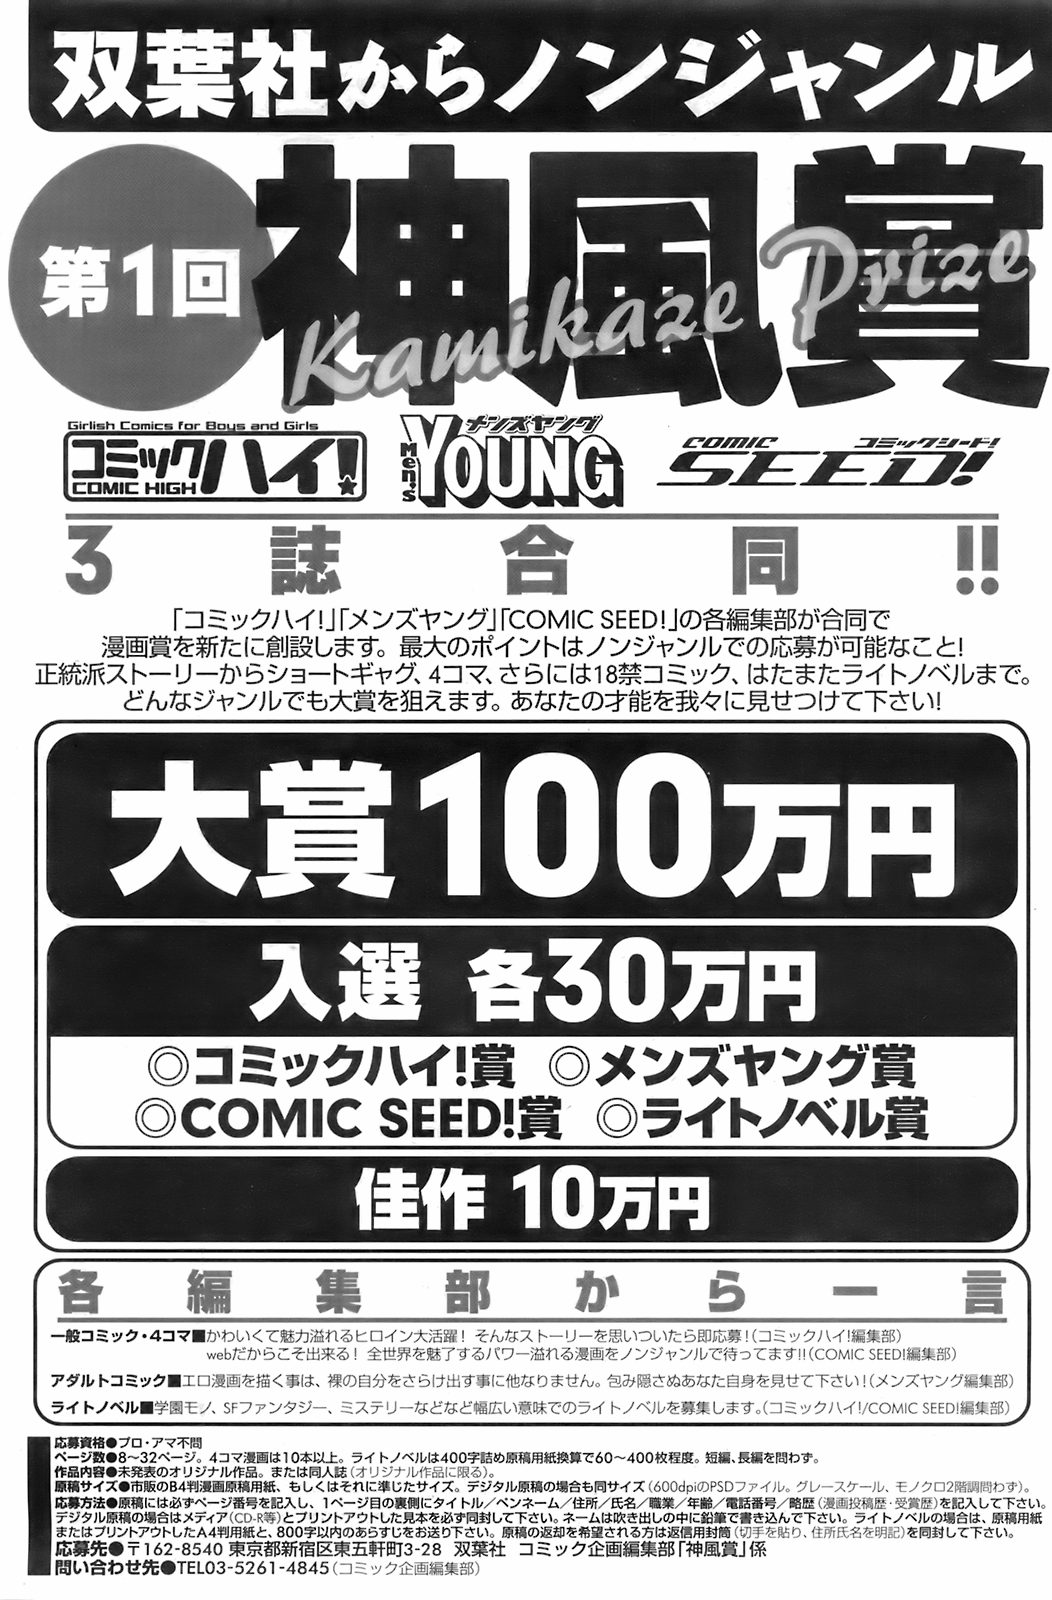 Men's YOUNG 2008-02 メンズヤング 2008年02月号